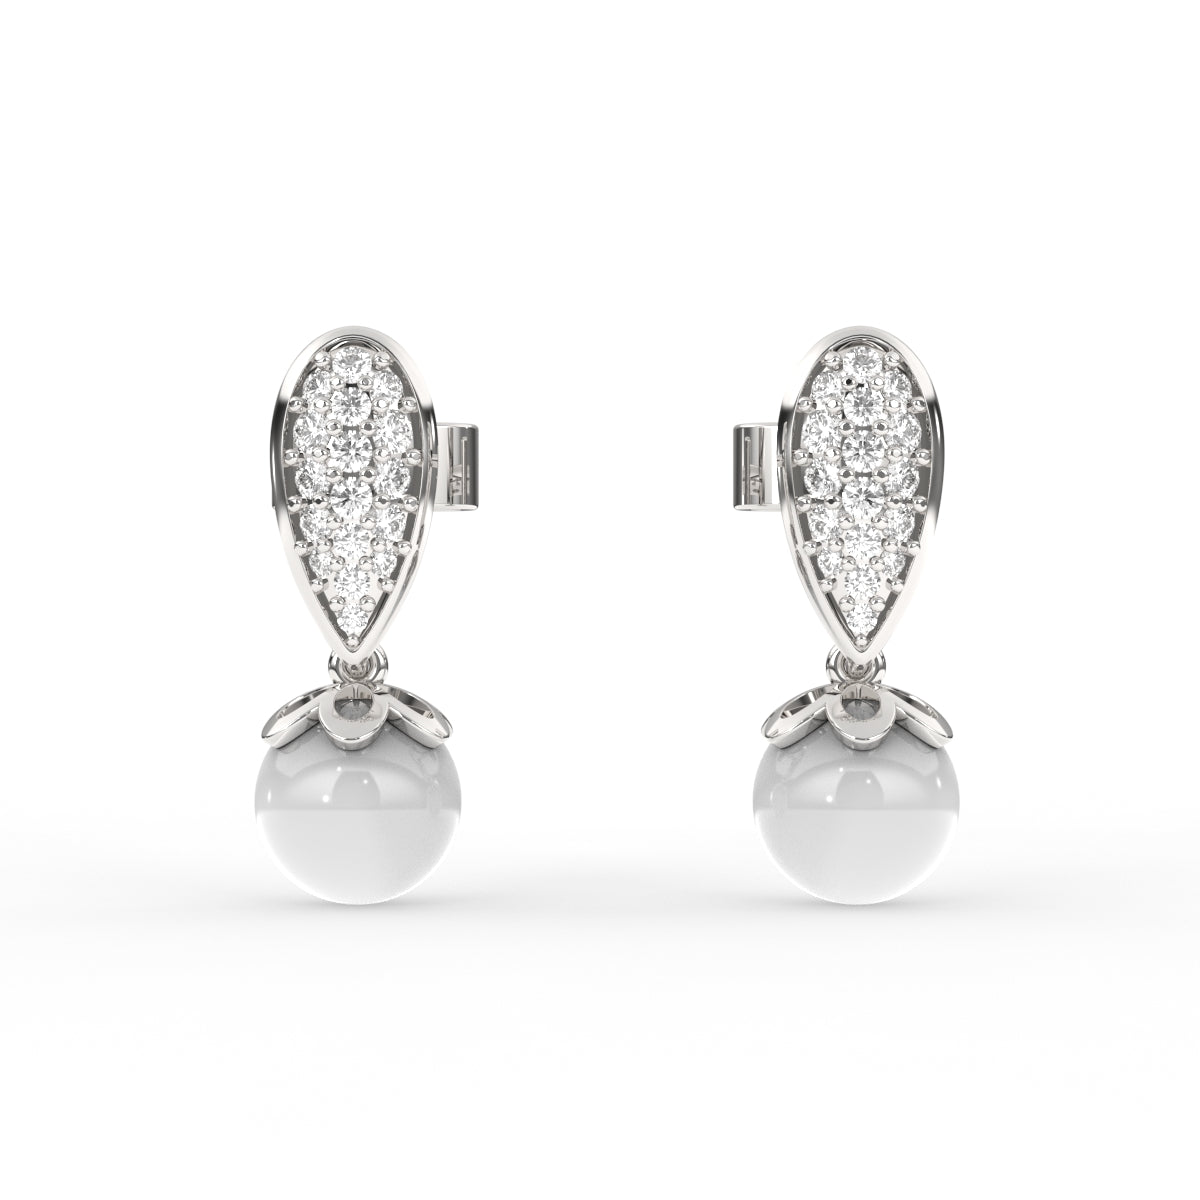 Designer Diamond and Pearl Drop Earrings